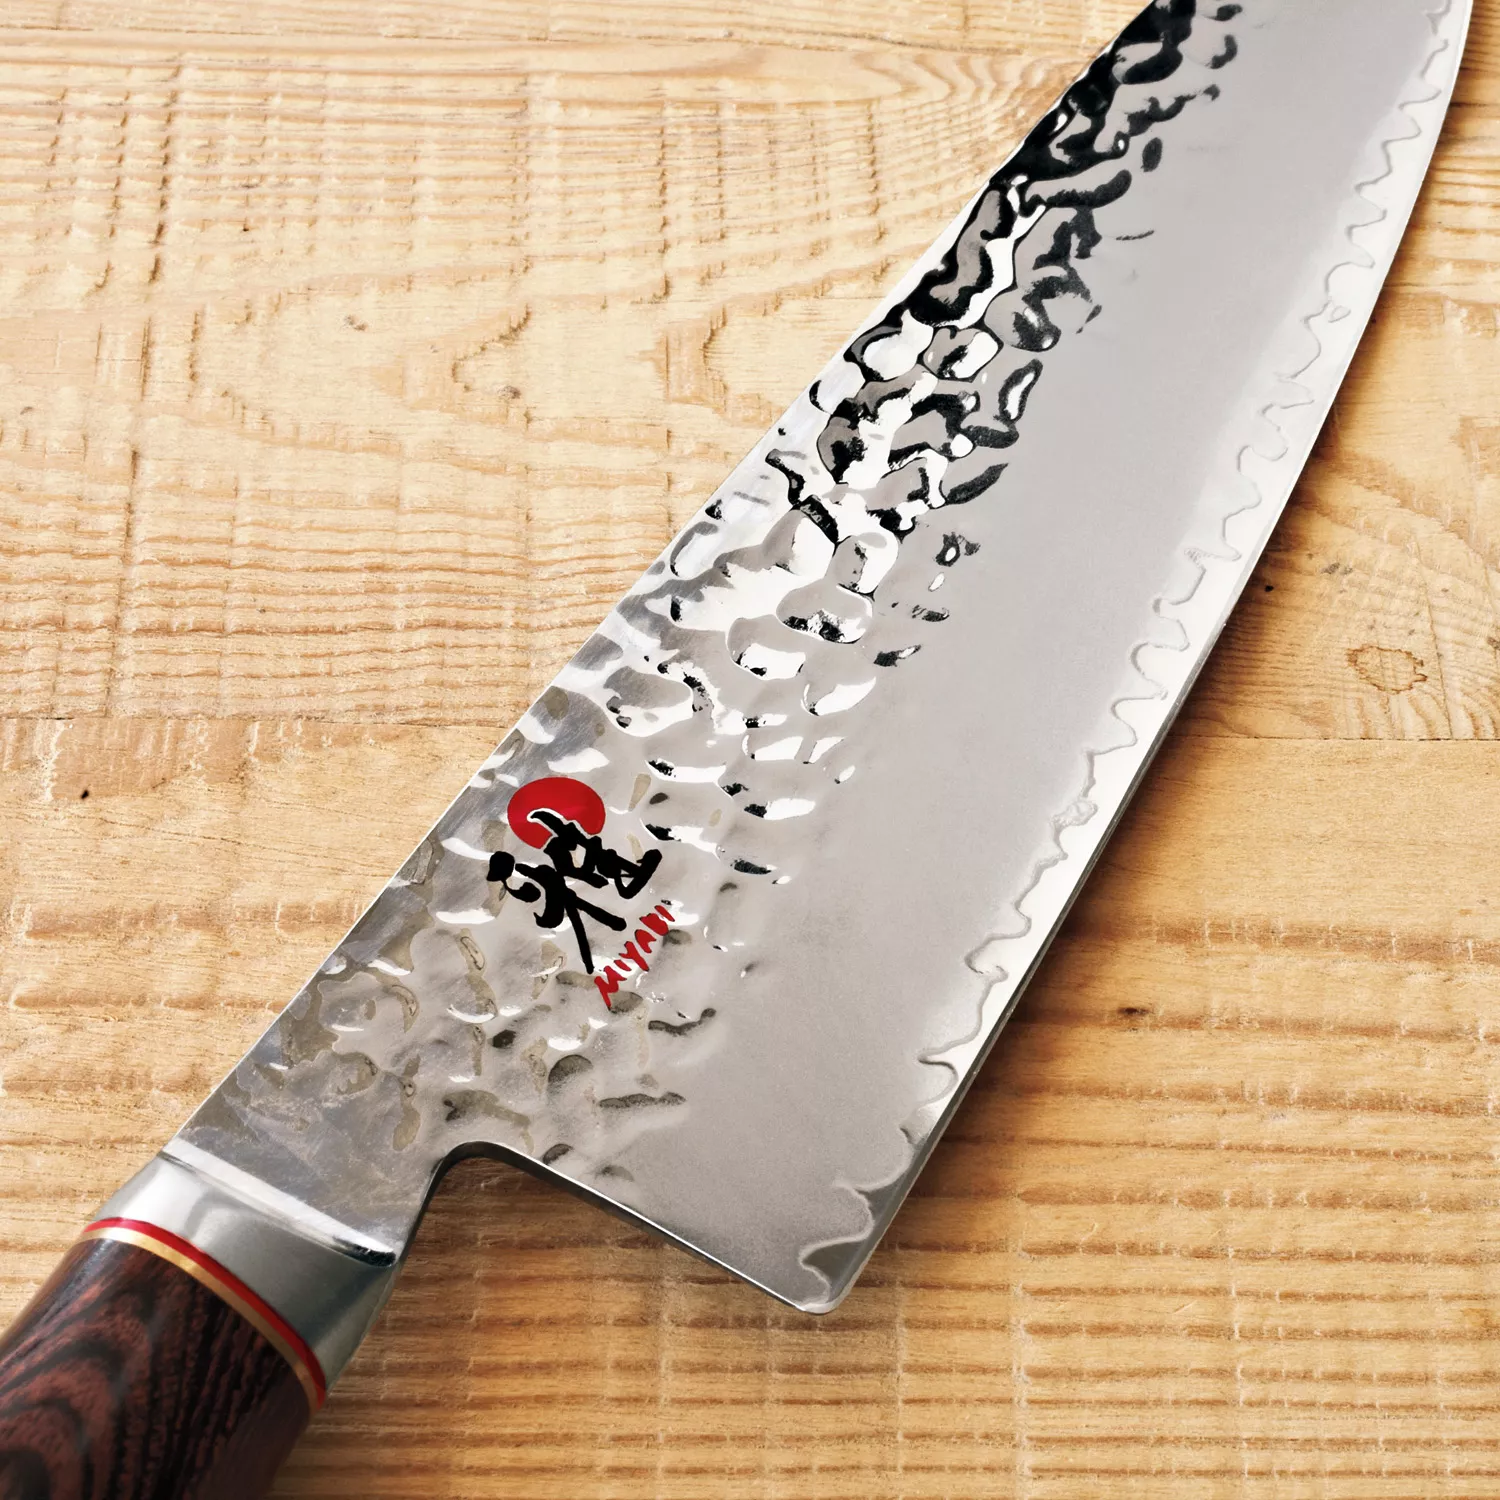 Miyabi Artisan 10-piece Knife Block Set